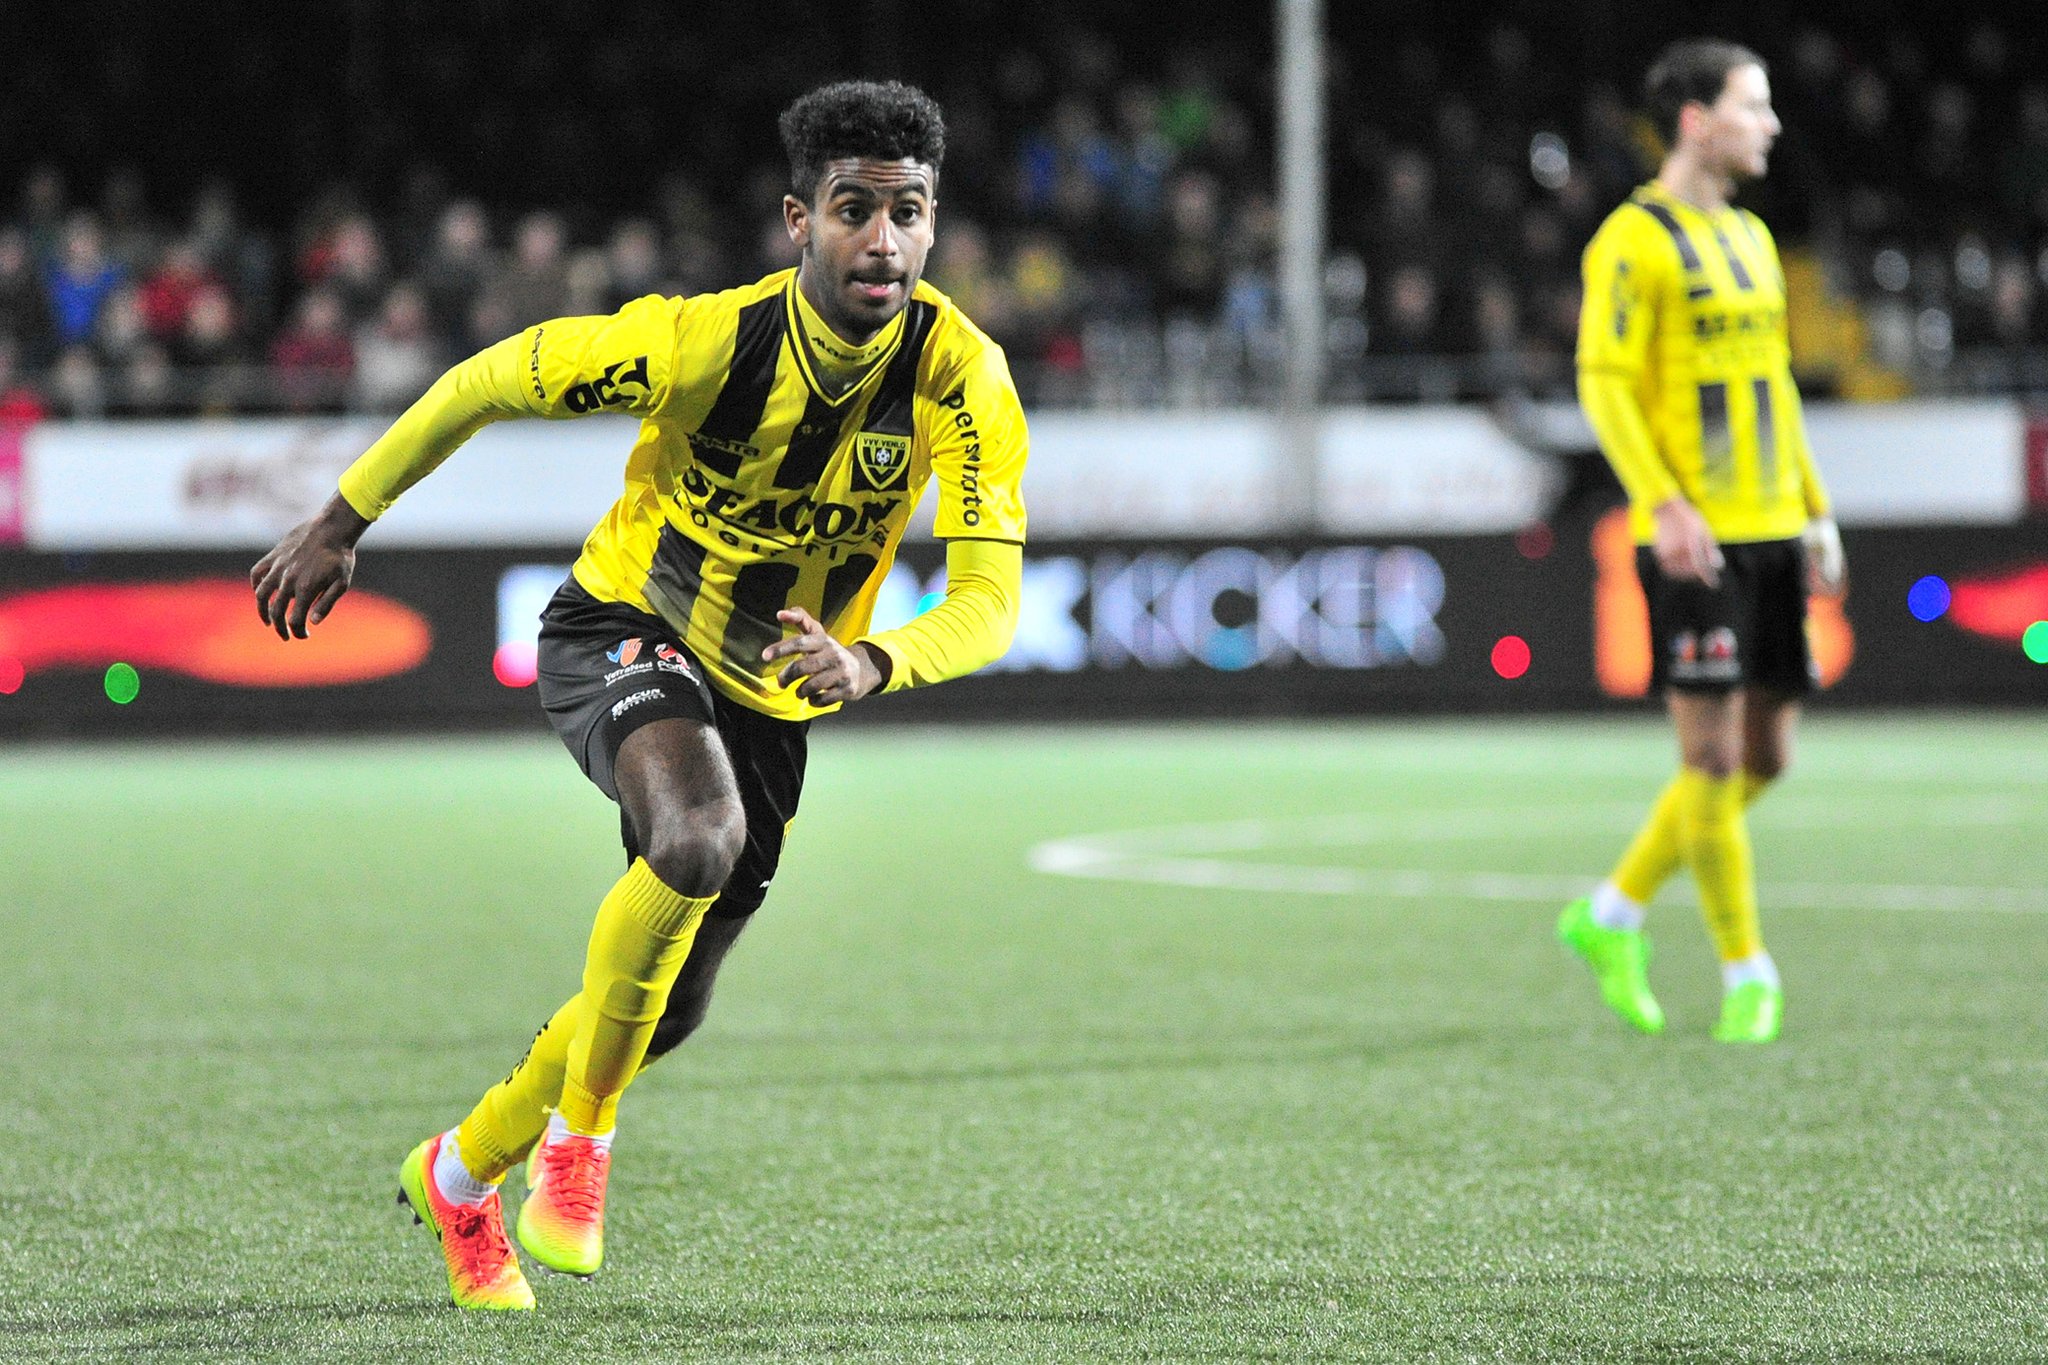 Zelalem scores first professional goal for VVV-Venlo in rout - SBI Soccer